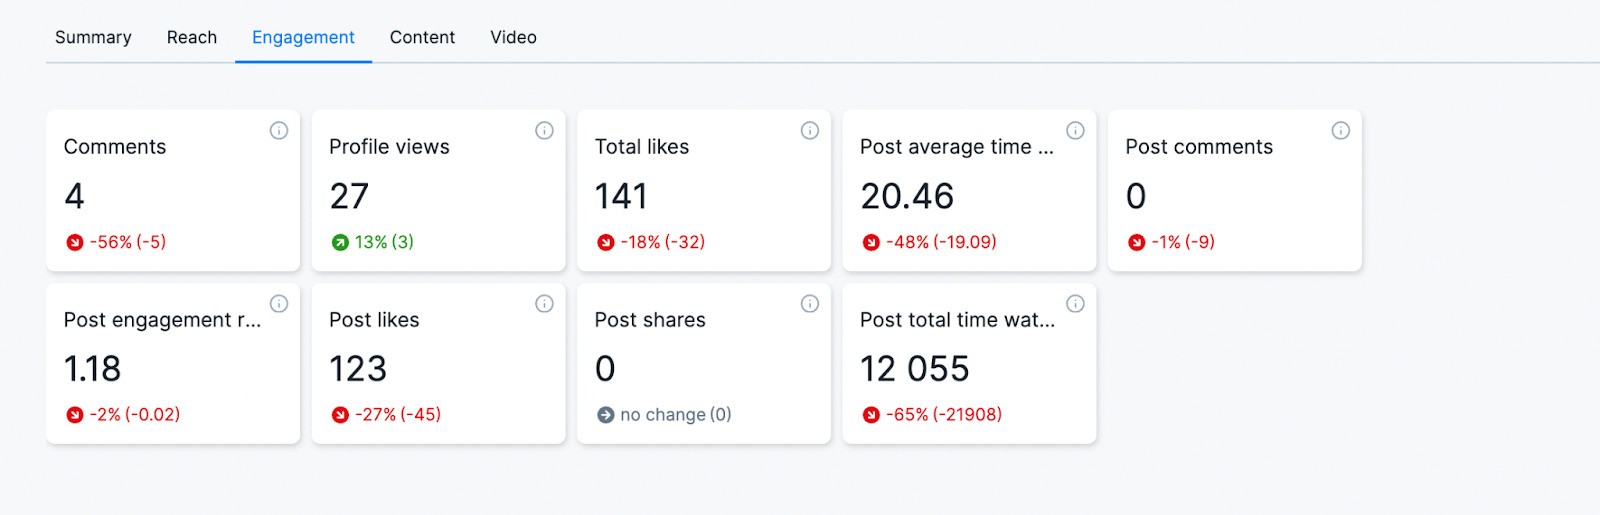 Smart Social Media Goals - TikTok engagement analytics in NapoleonCat